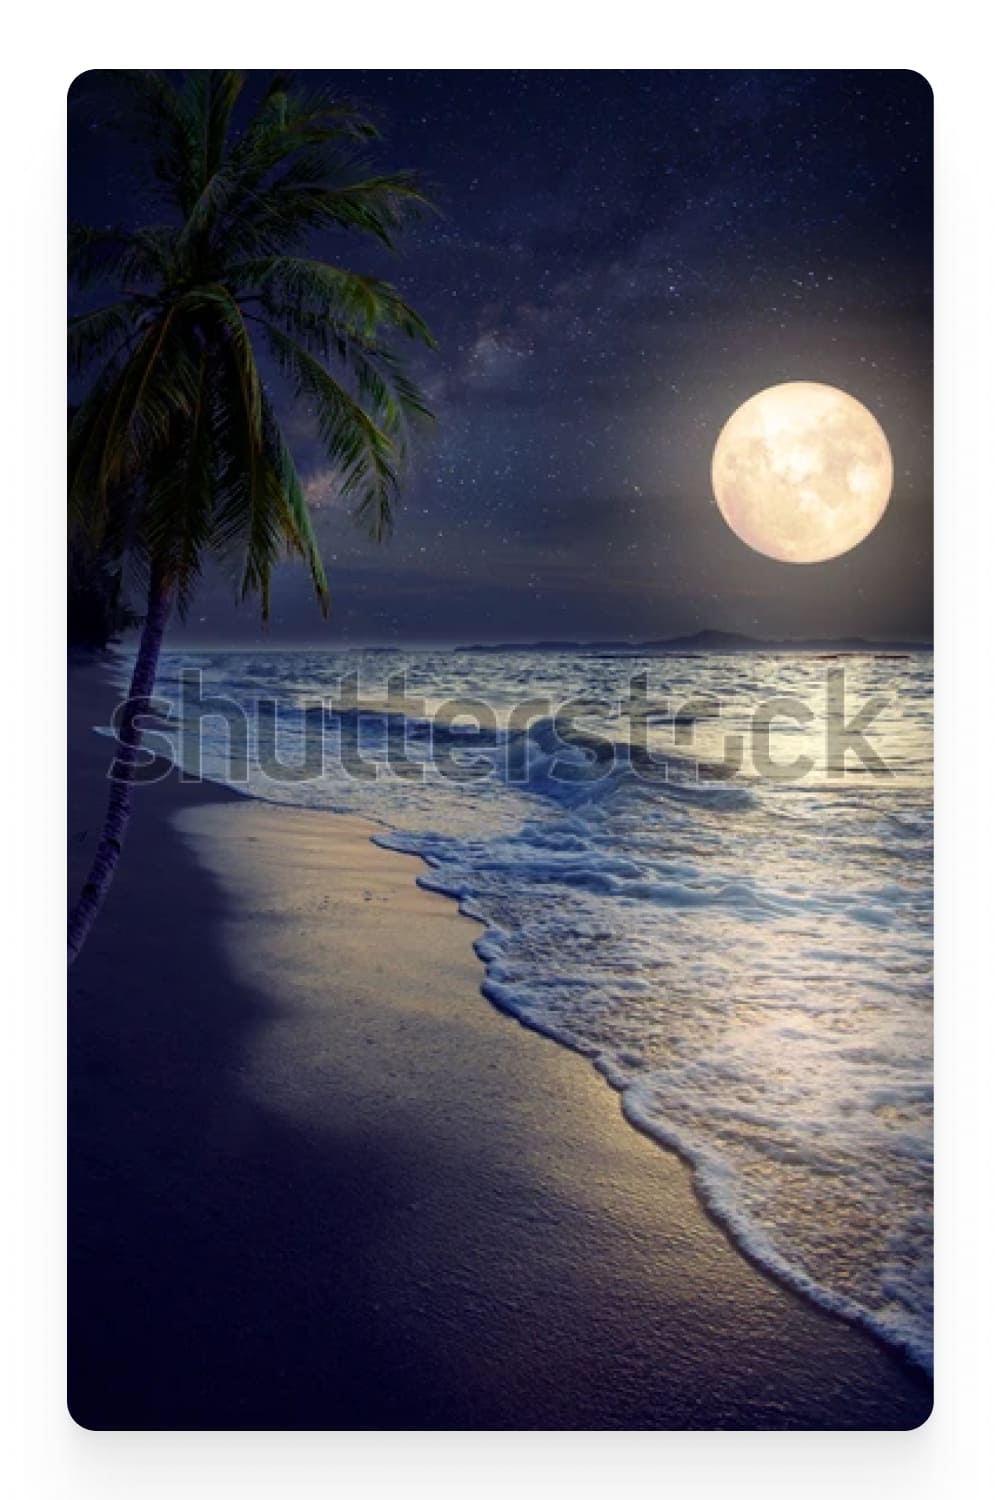 Photo of a full moon over a tropical beach.